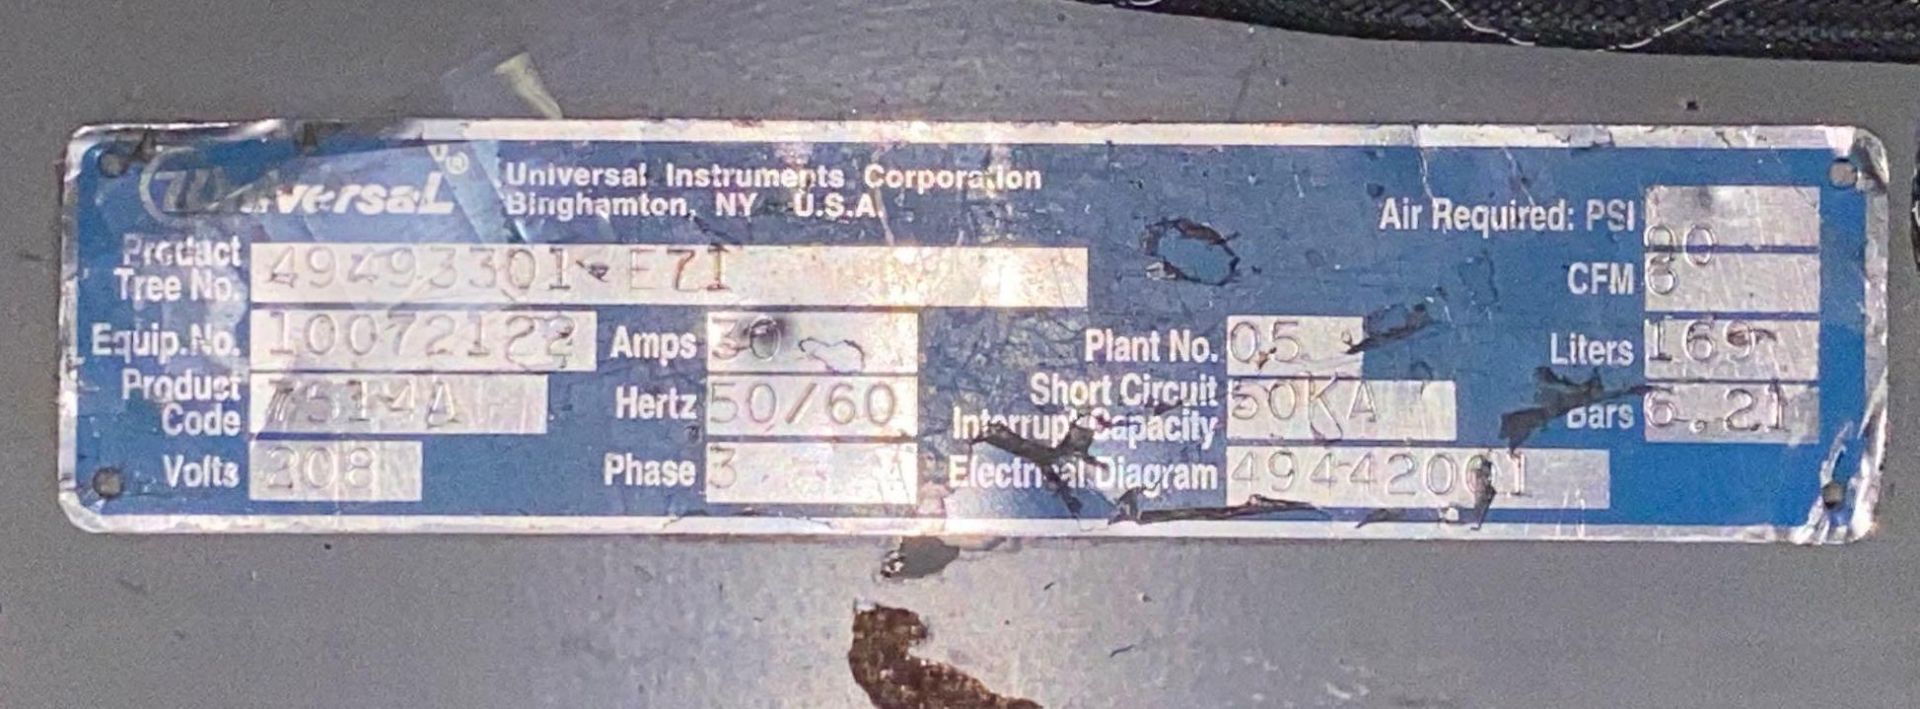 Universal Instruments Polaris # 7514A Inspection / Handler - Image 11 of 11